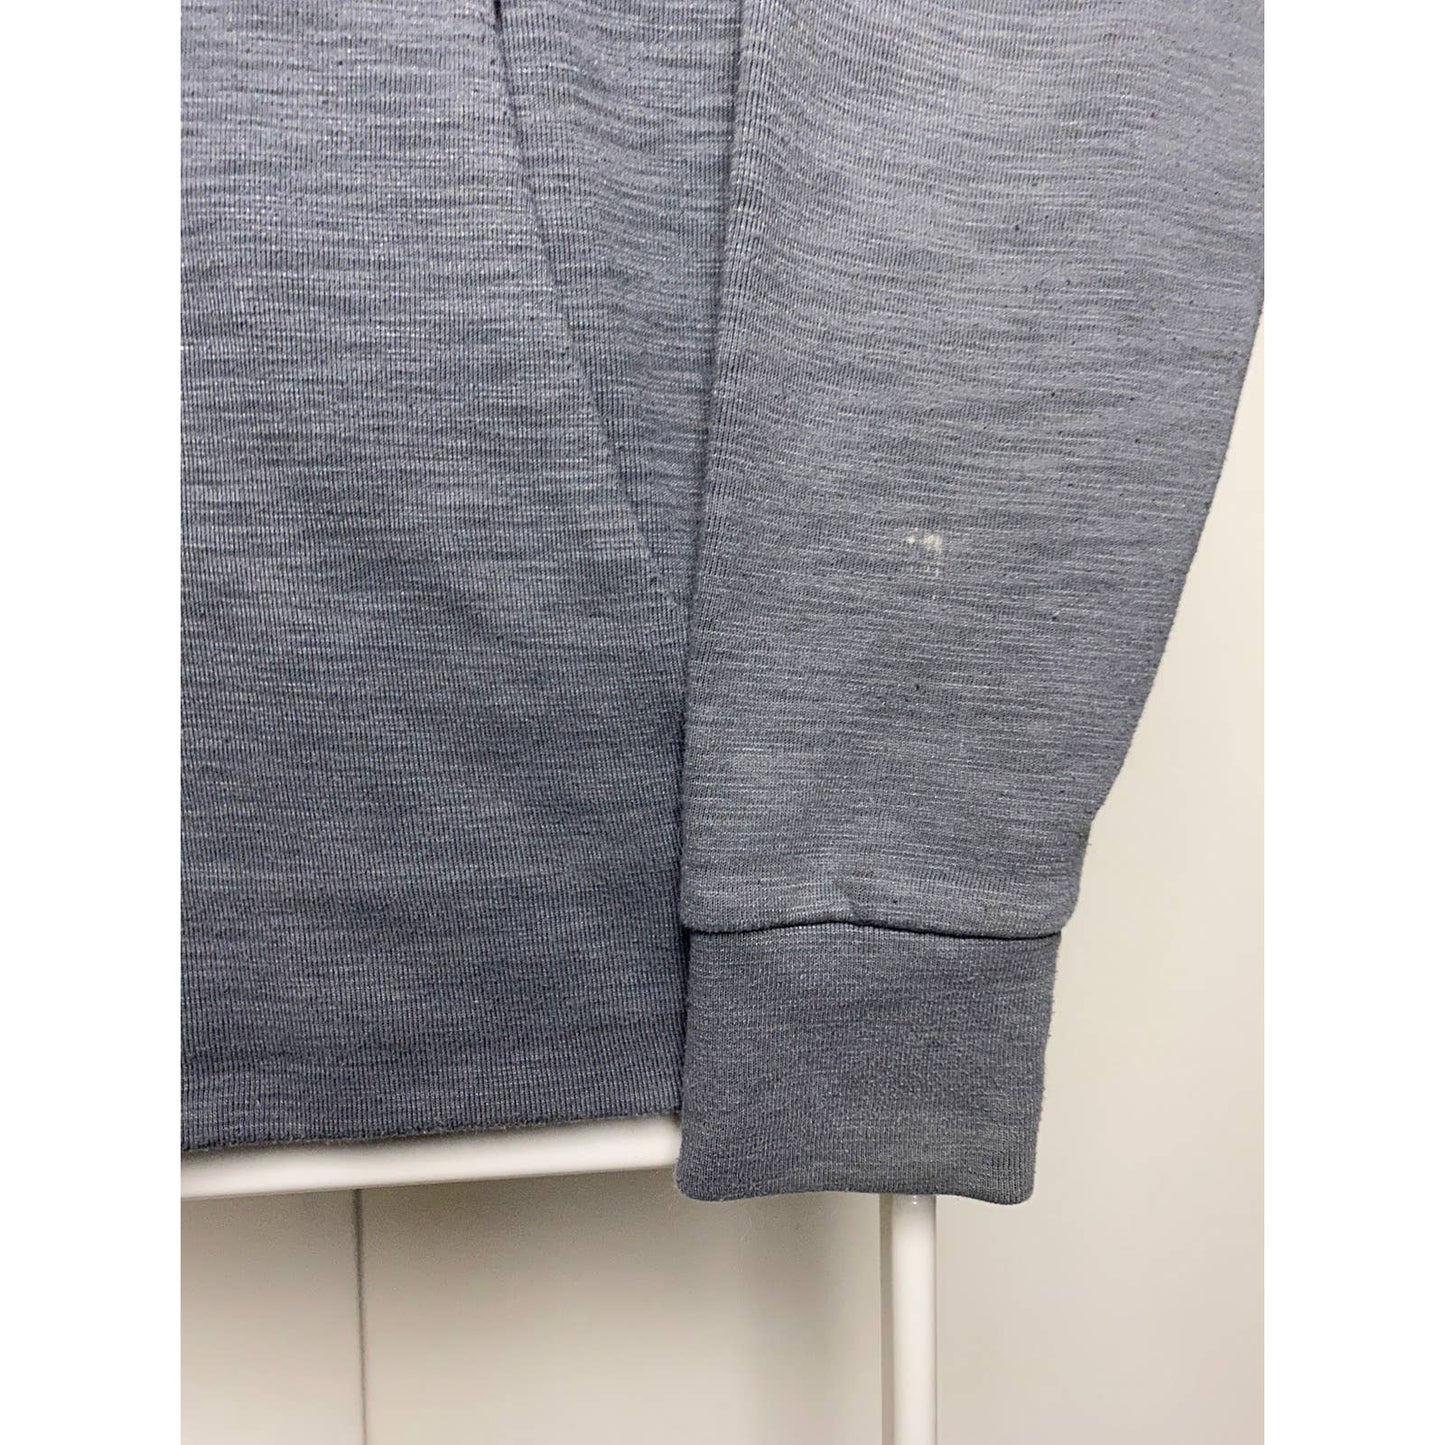 Nike grey zip up hoodie vintage style tech fleece